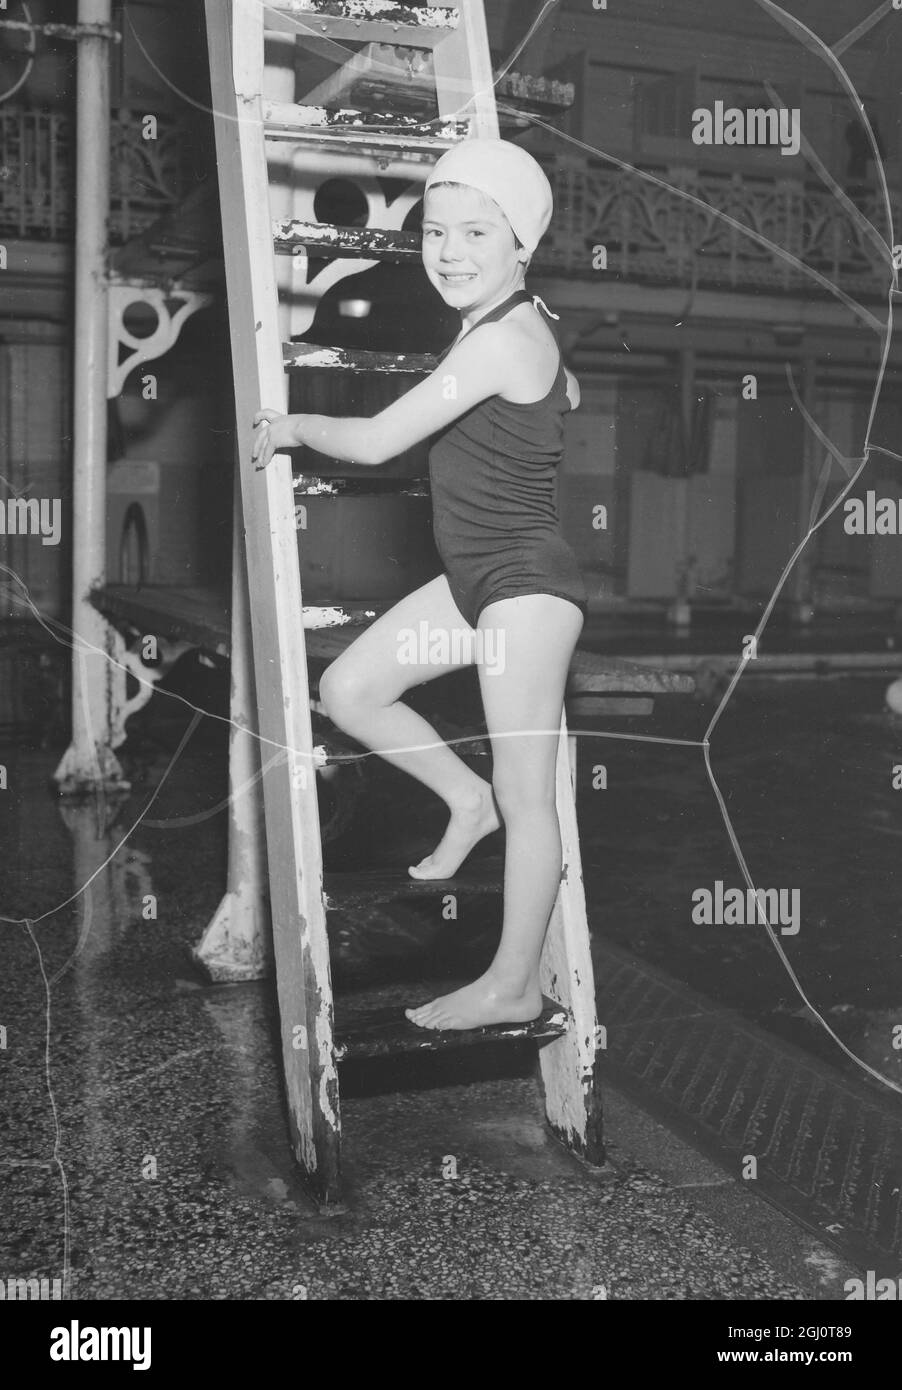 ANGELA SULLIVAN EIGHT YEAR OLD SWIMMING PRODIGY 5 FEBRUARY 1960 Stock Photo